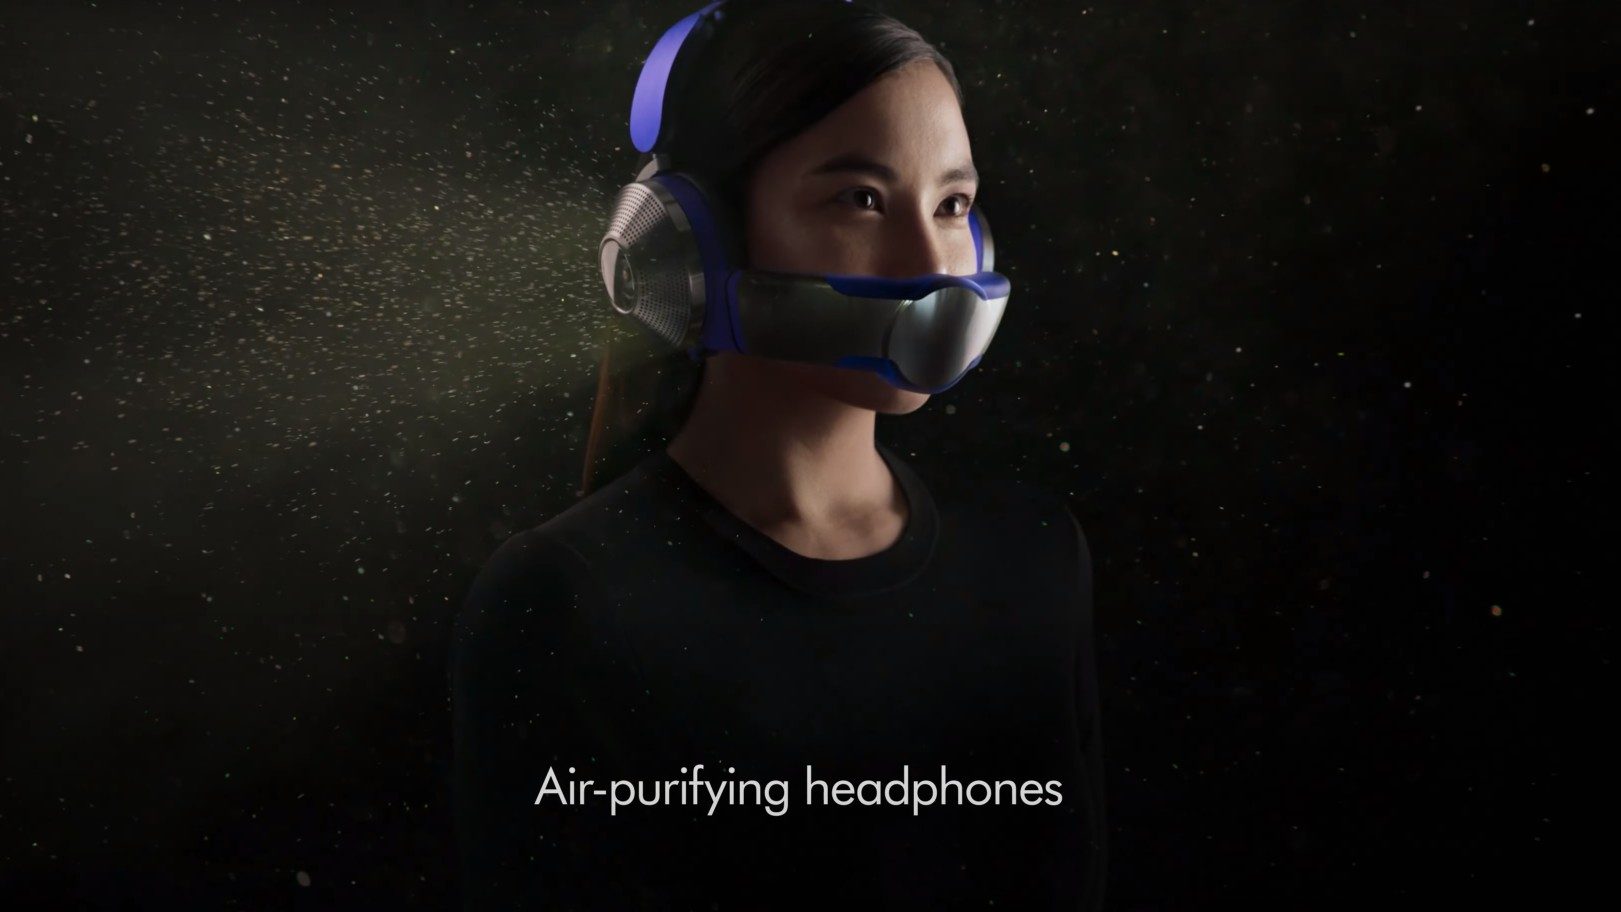 Dyson announces full specs for air-purifying headphones